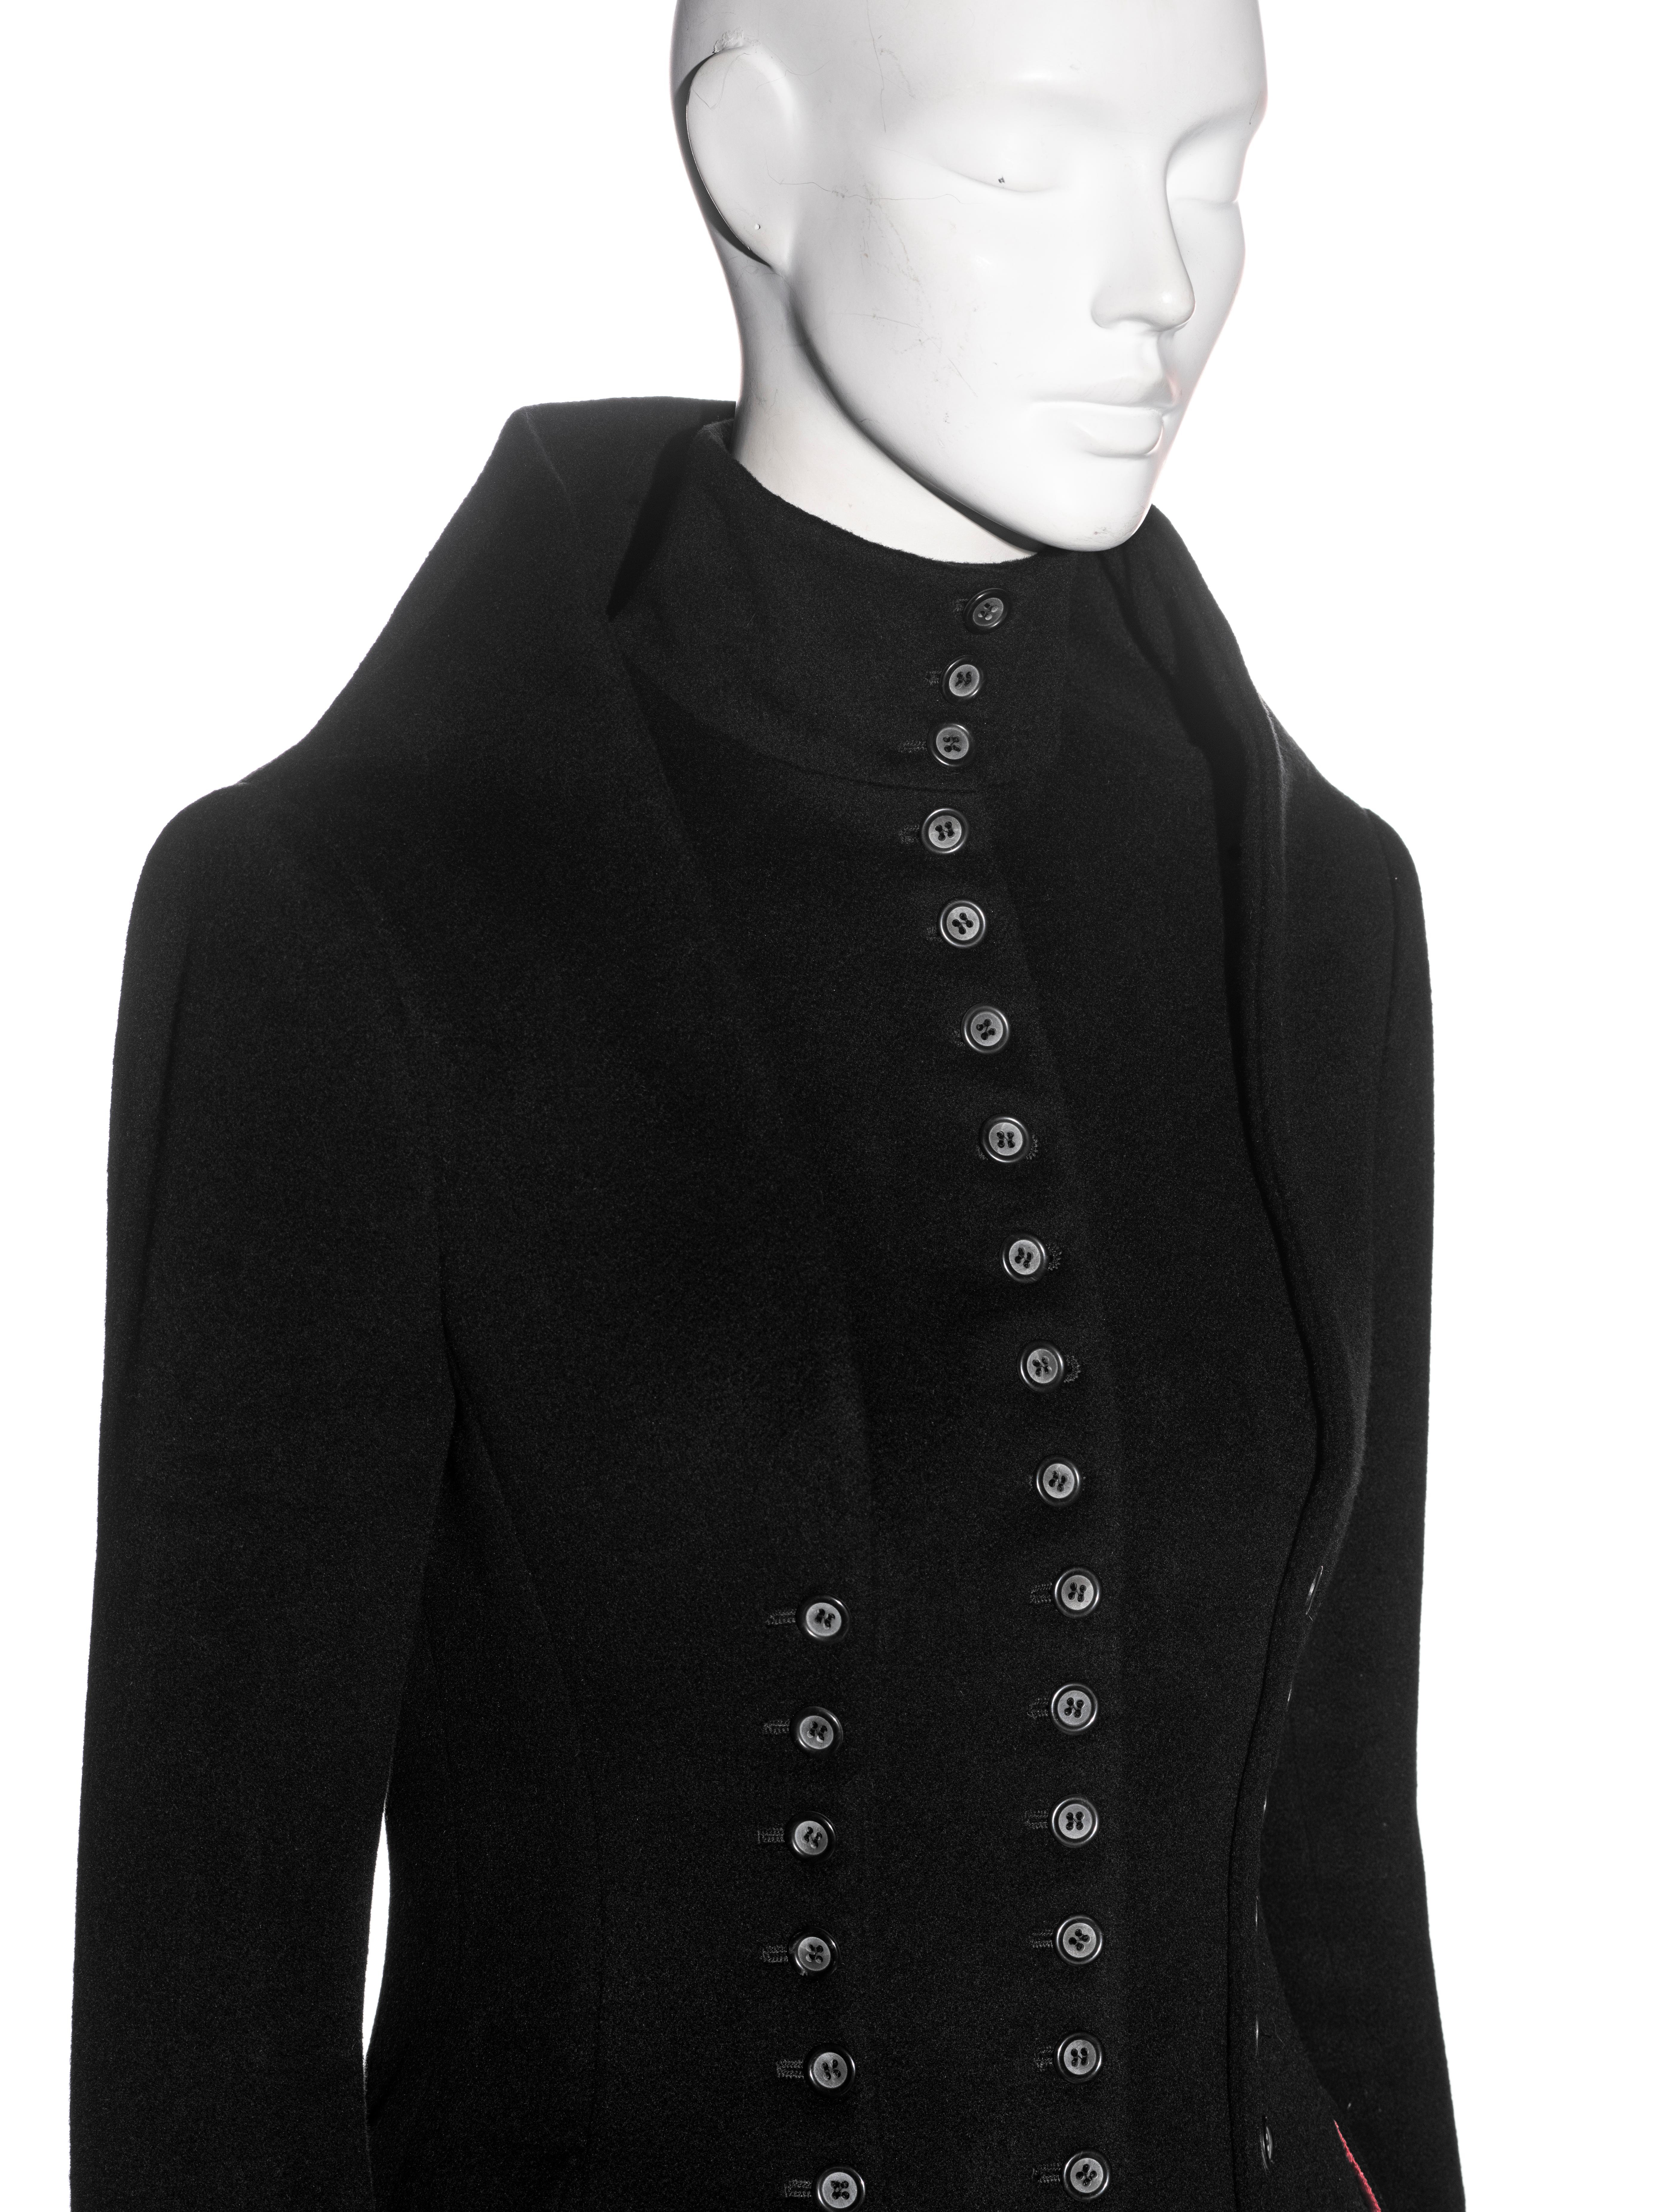 Alexander McQueen black cashmere 'Joan' jacket and skirt suit, fw 1998 2